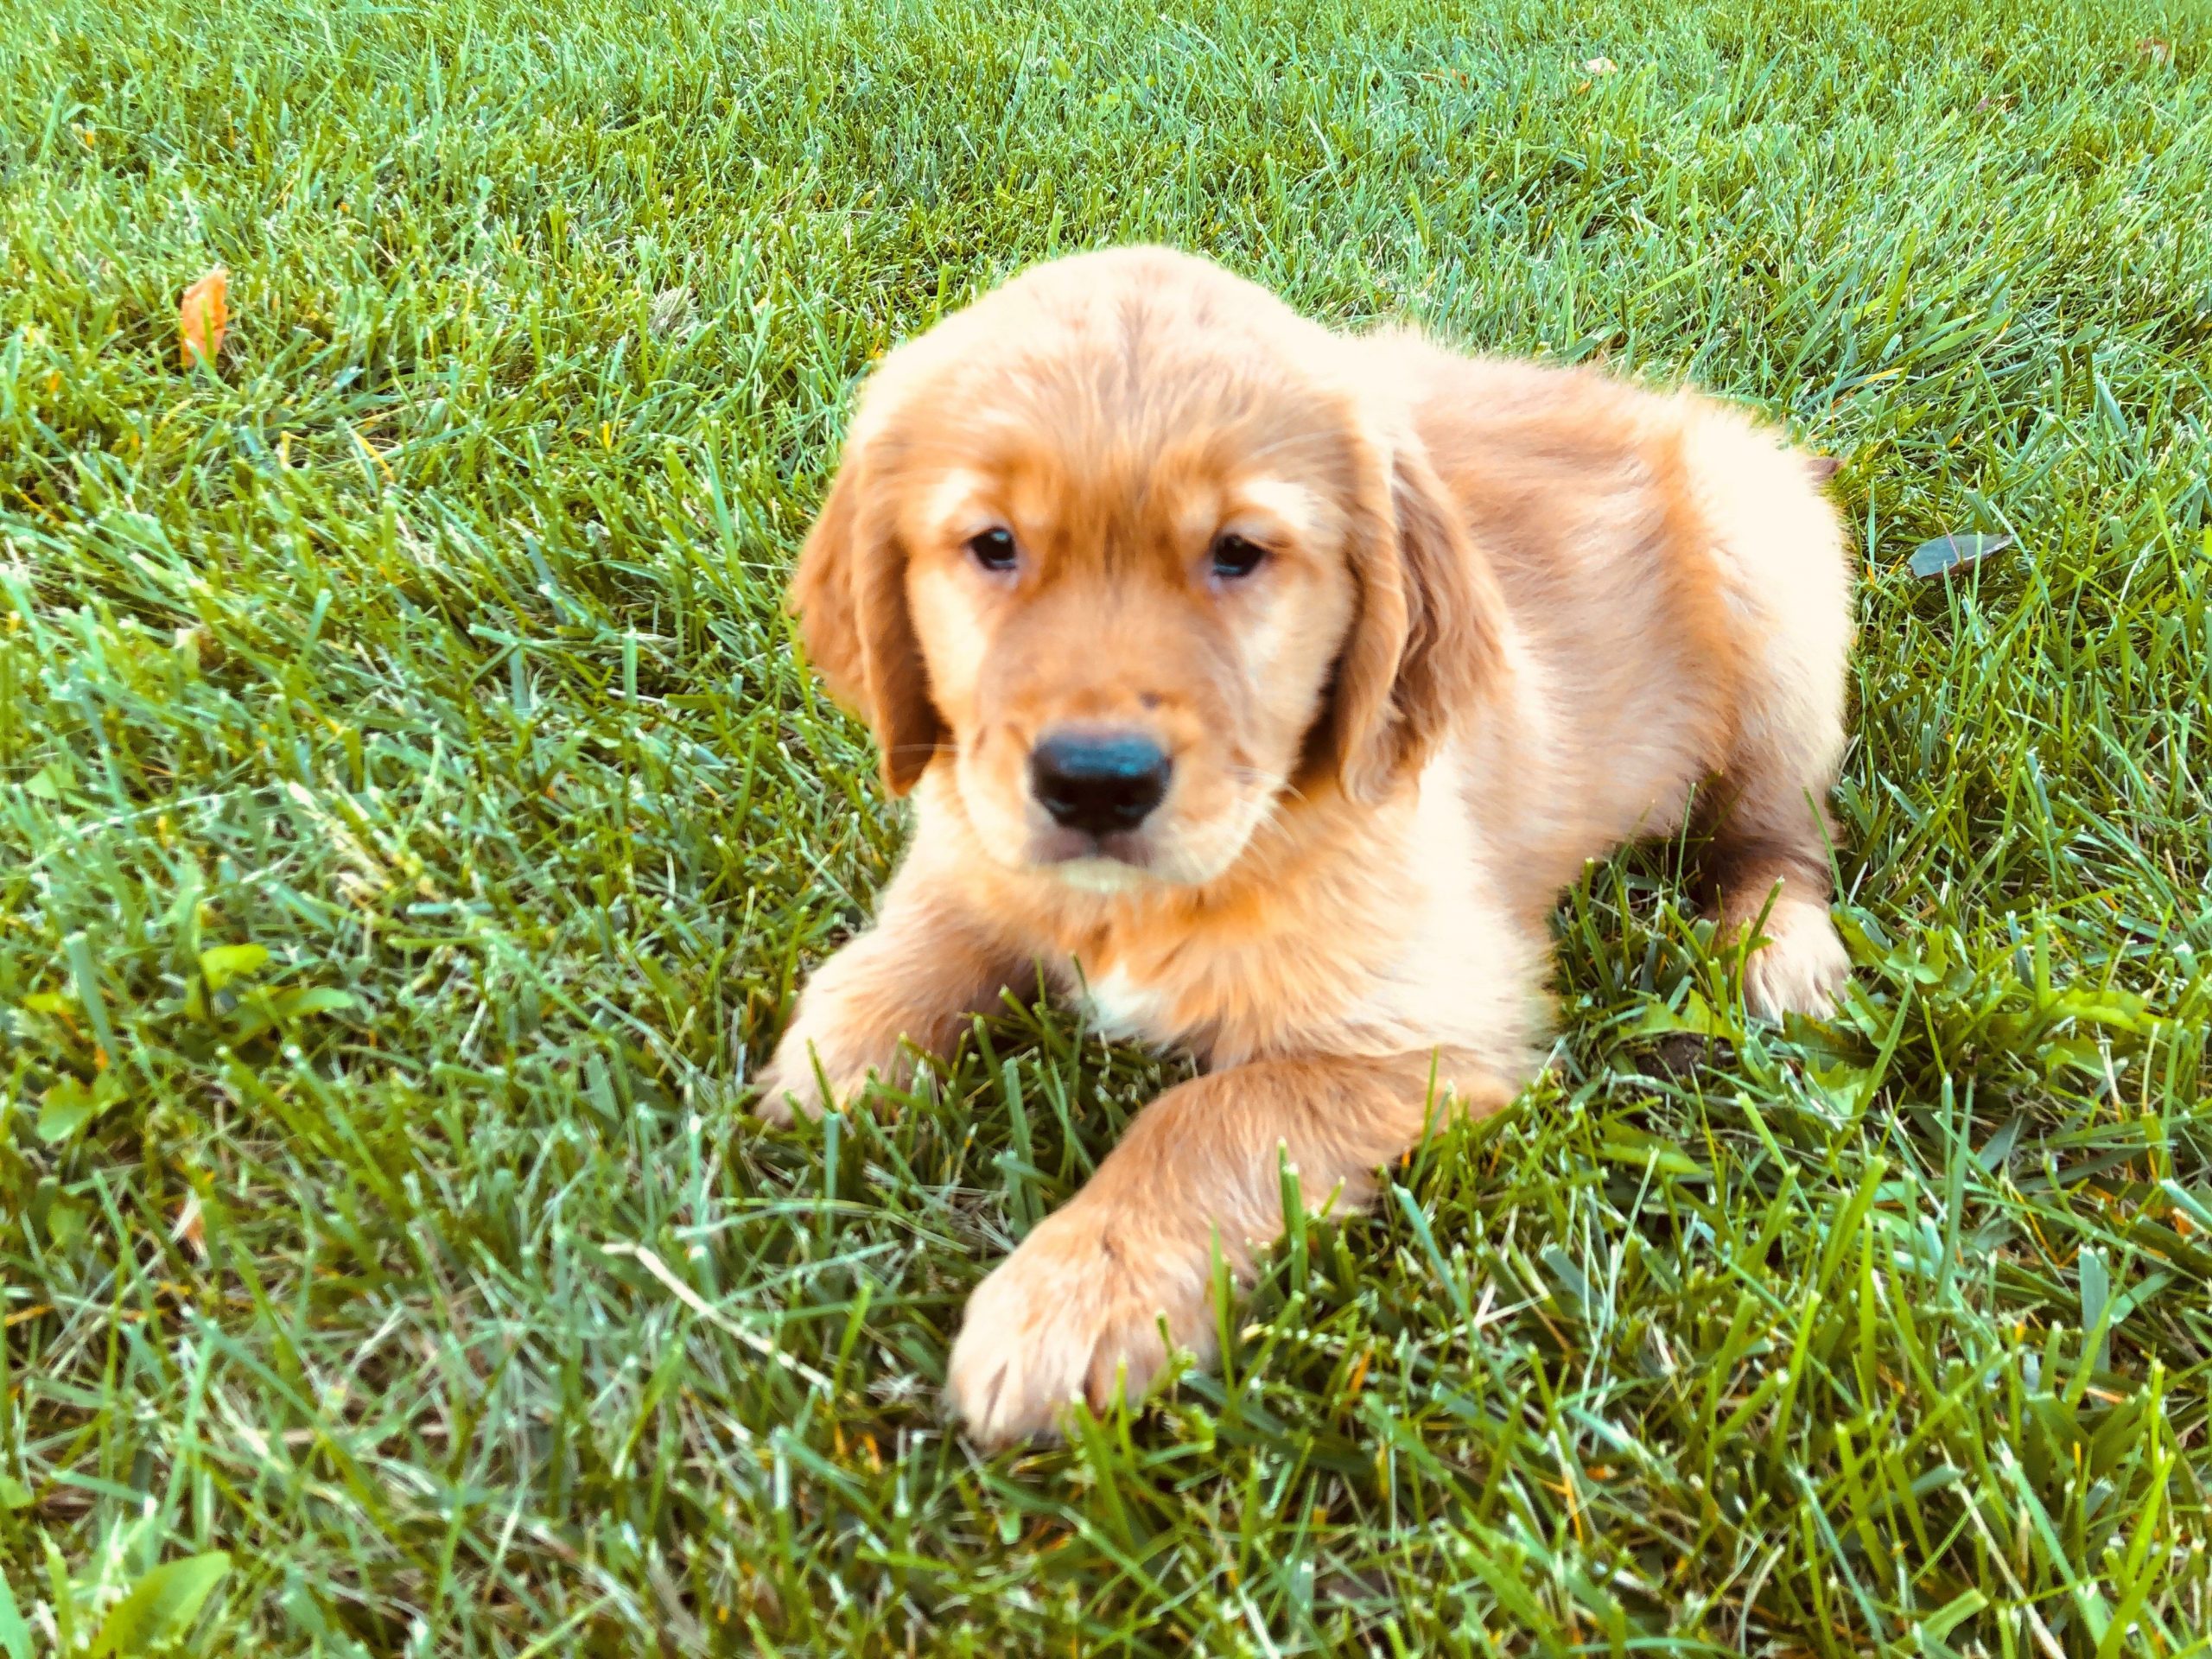 Petland Kansas City has Golden Retriever puppies for sale ...